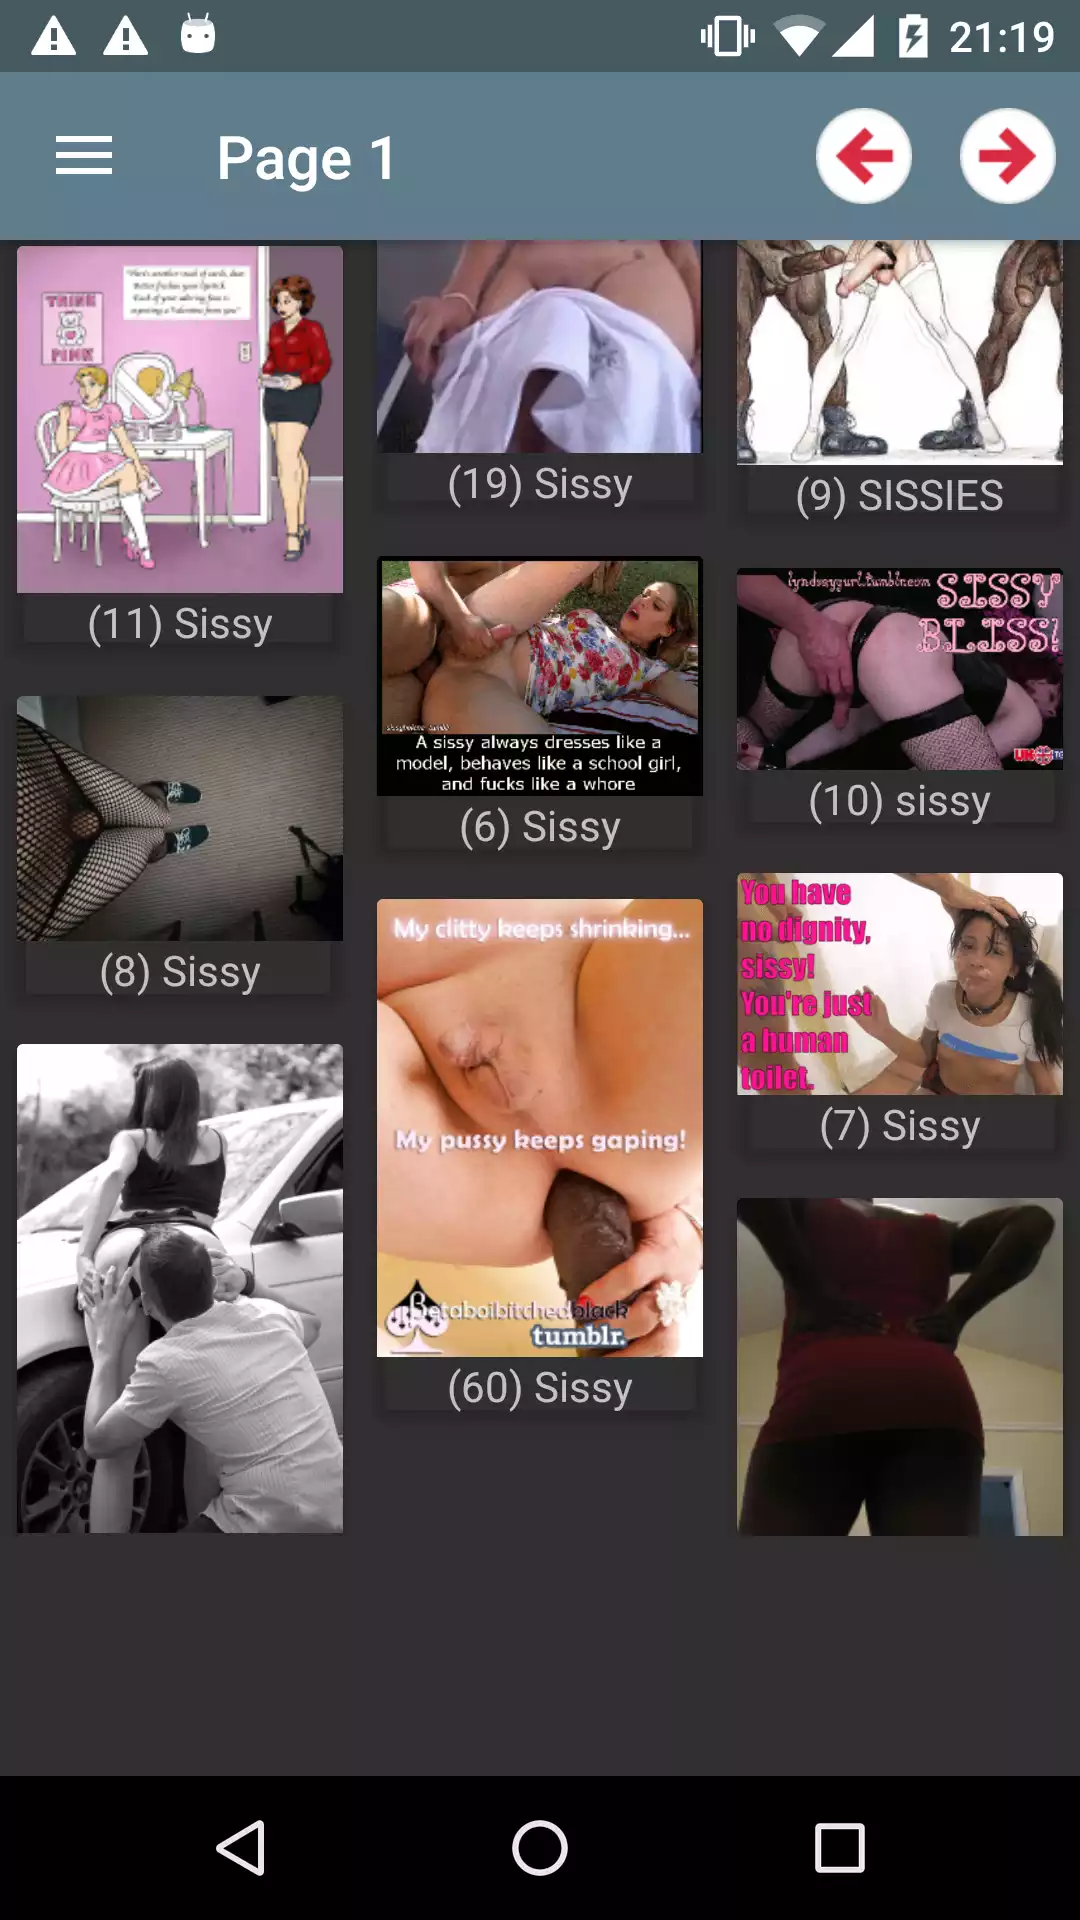 Femboy Galleries hot,pics,photos,sexy,apks,henta,photo,free,puzzle,pegging,download,cuckold,app,wallpapers,hentai,nhentai,wallpaper,erotic,apk,pornstar,porn,galleries